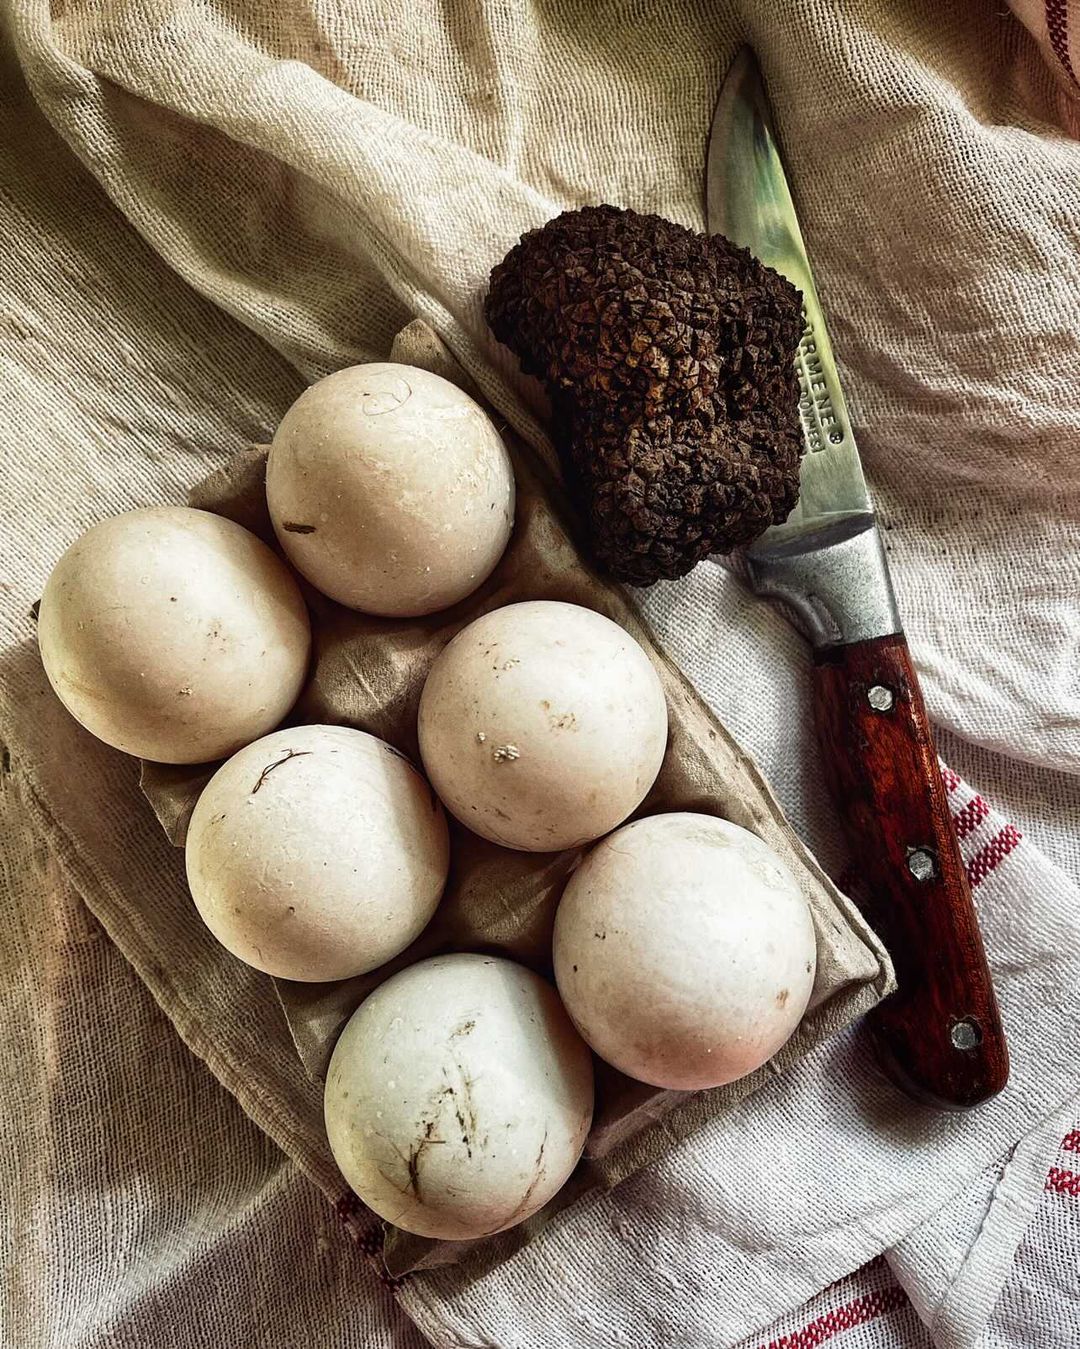 Photo of eggs alongside a knife